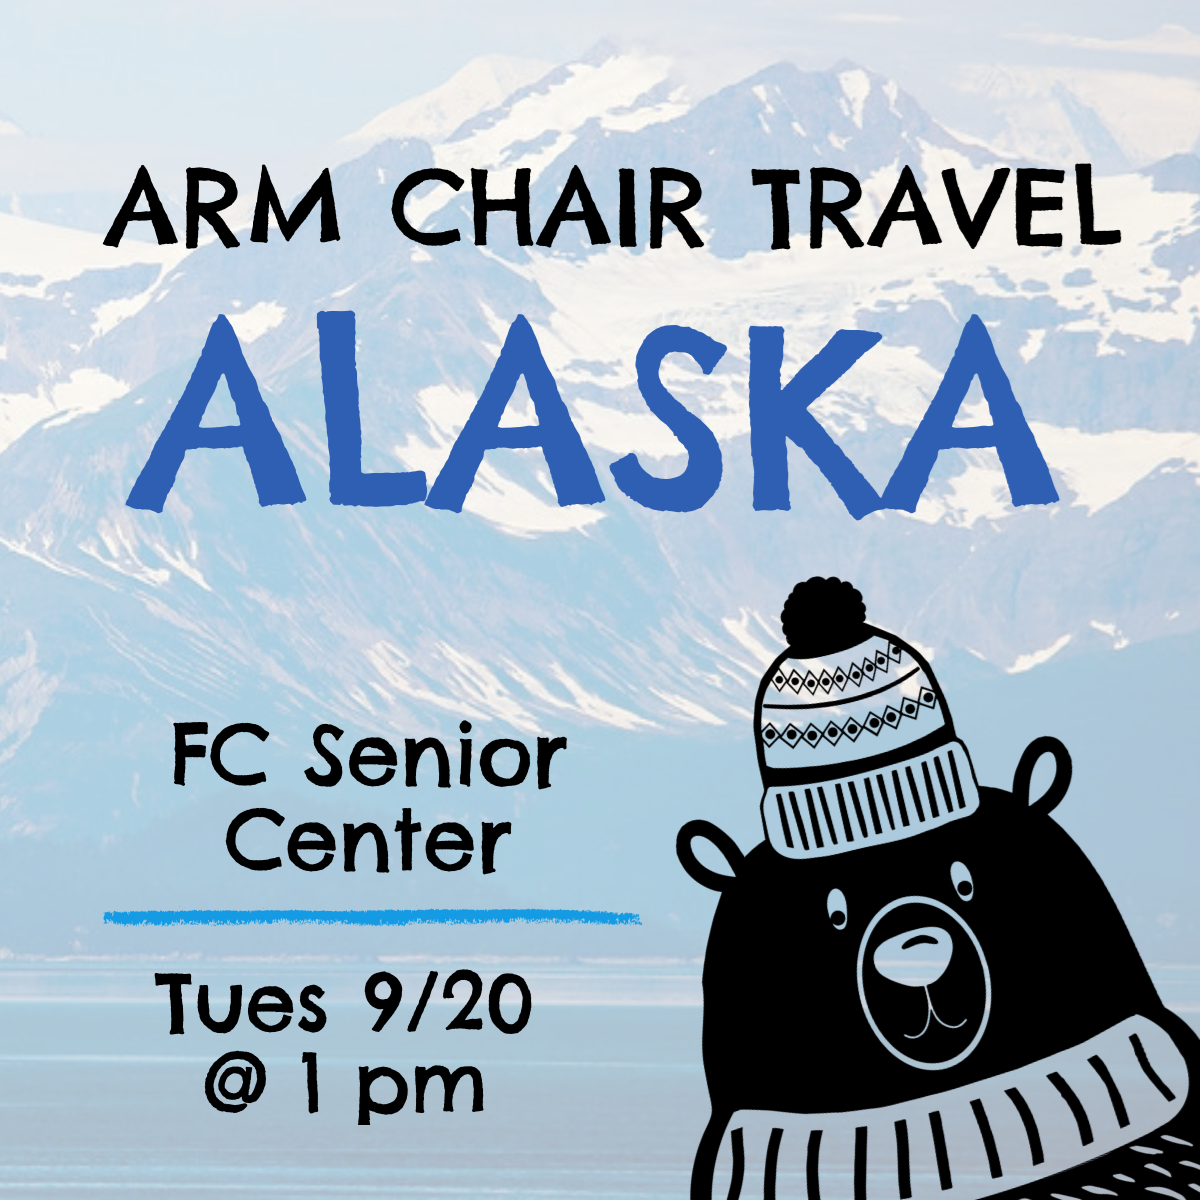 Arm Chair Travel Alaska